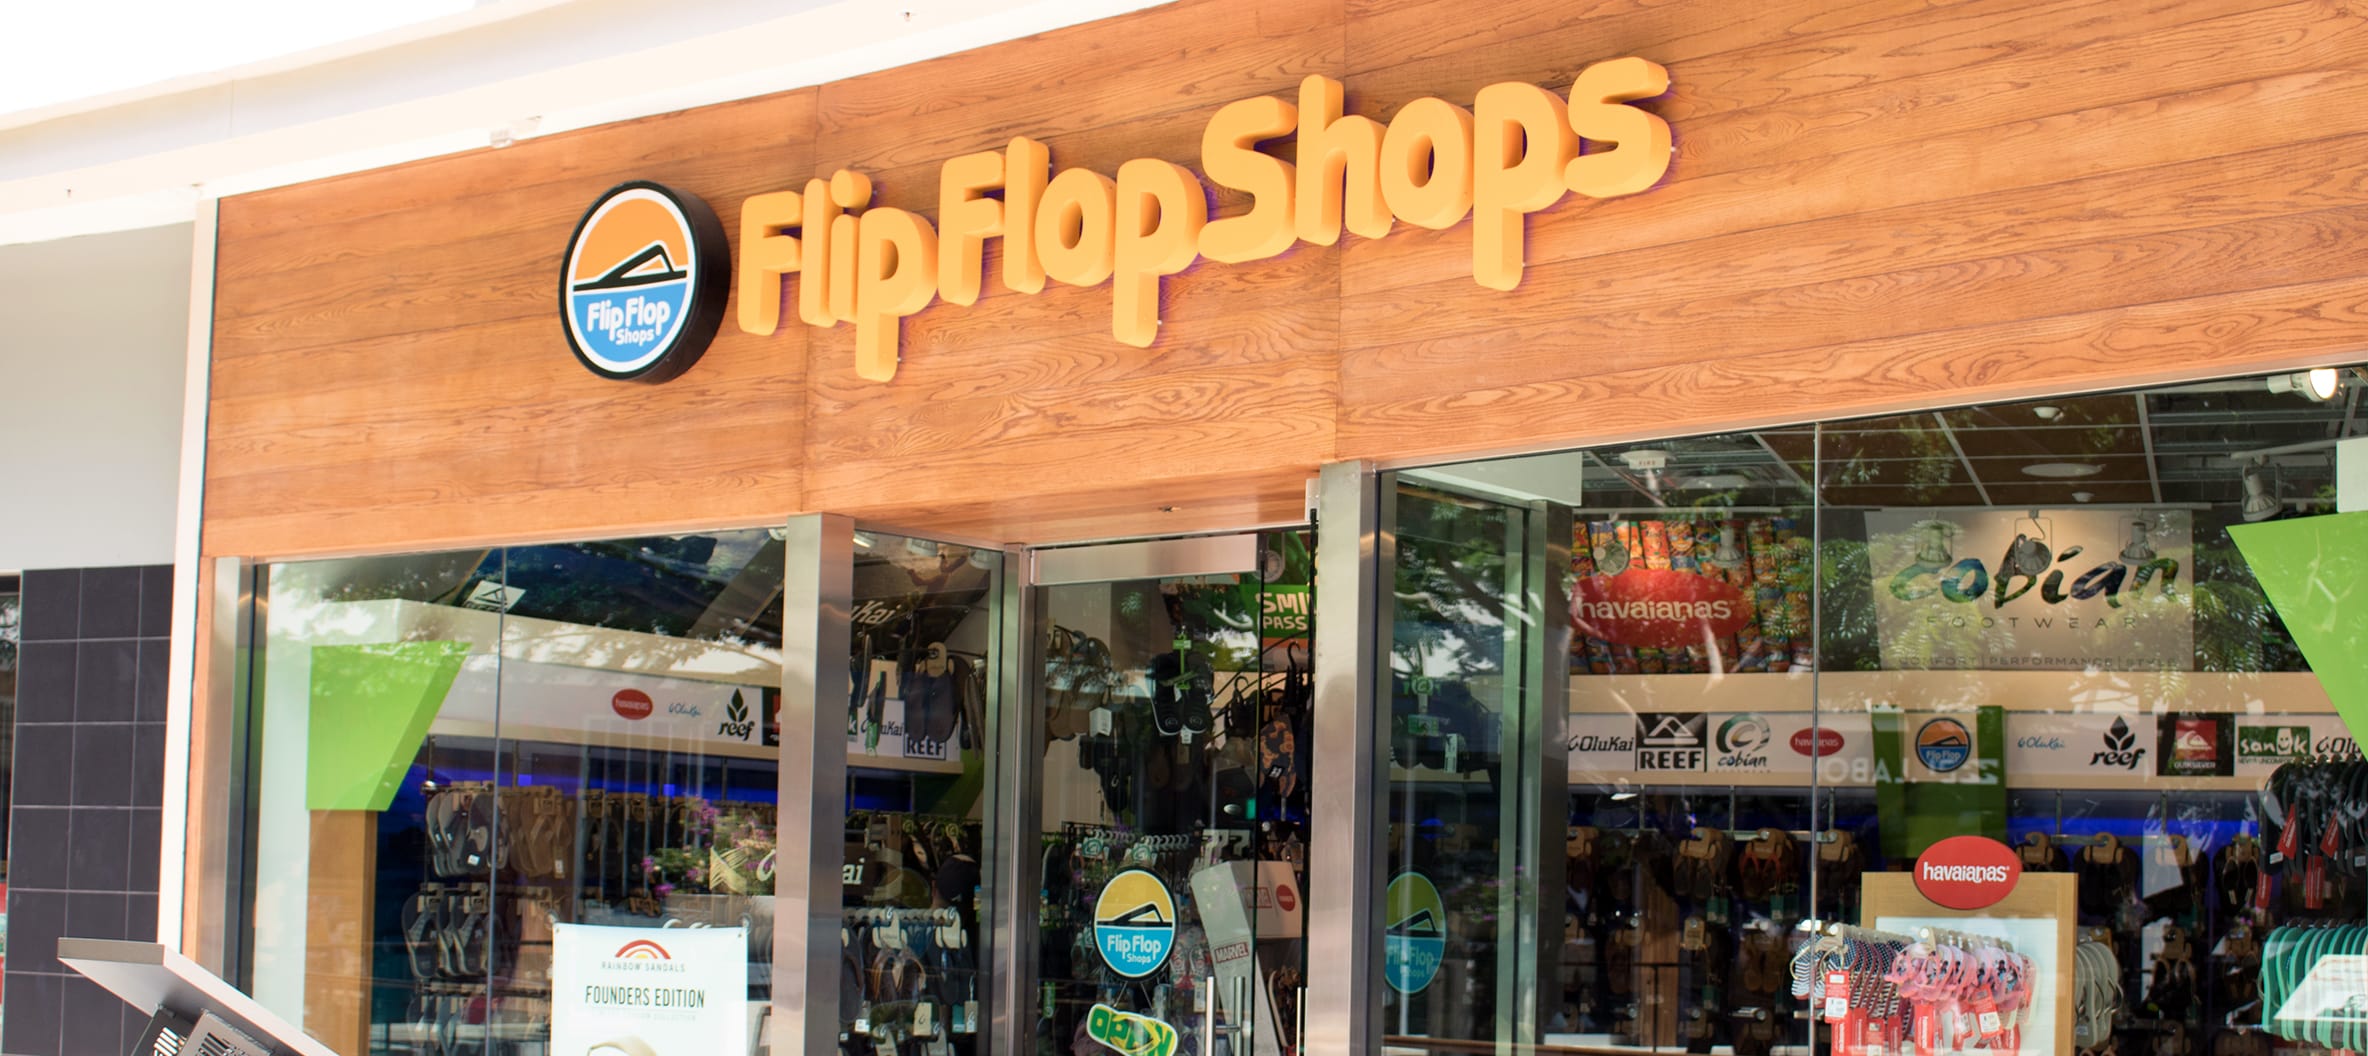 flip flop shop locations